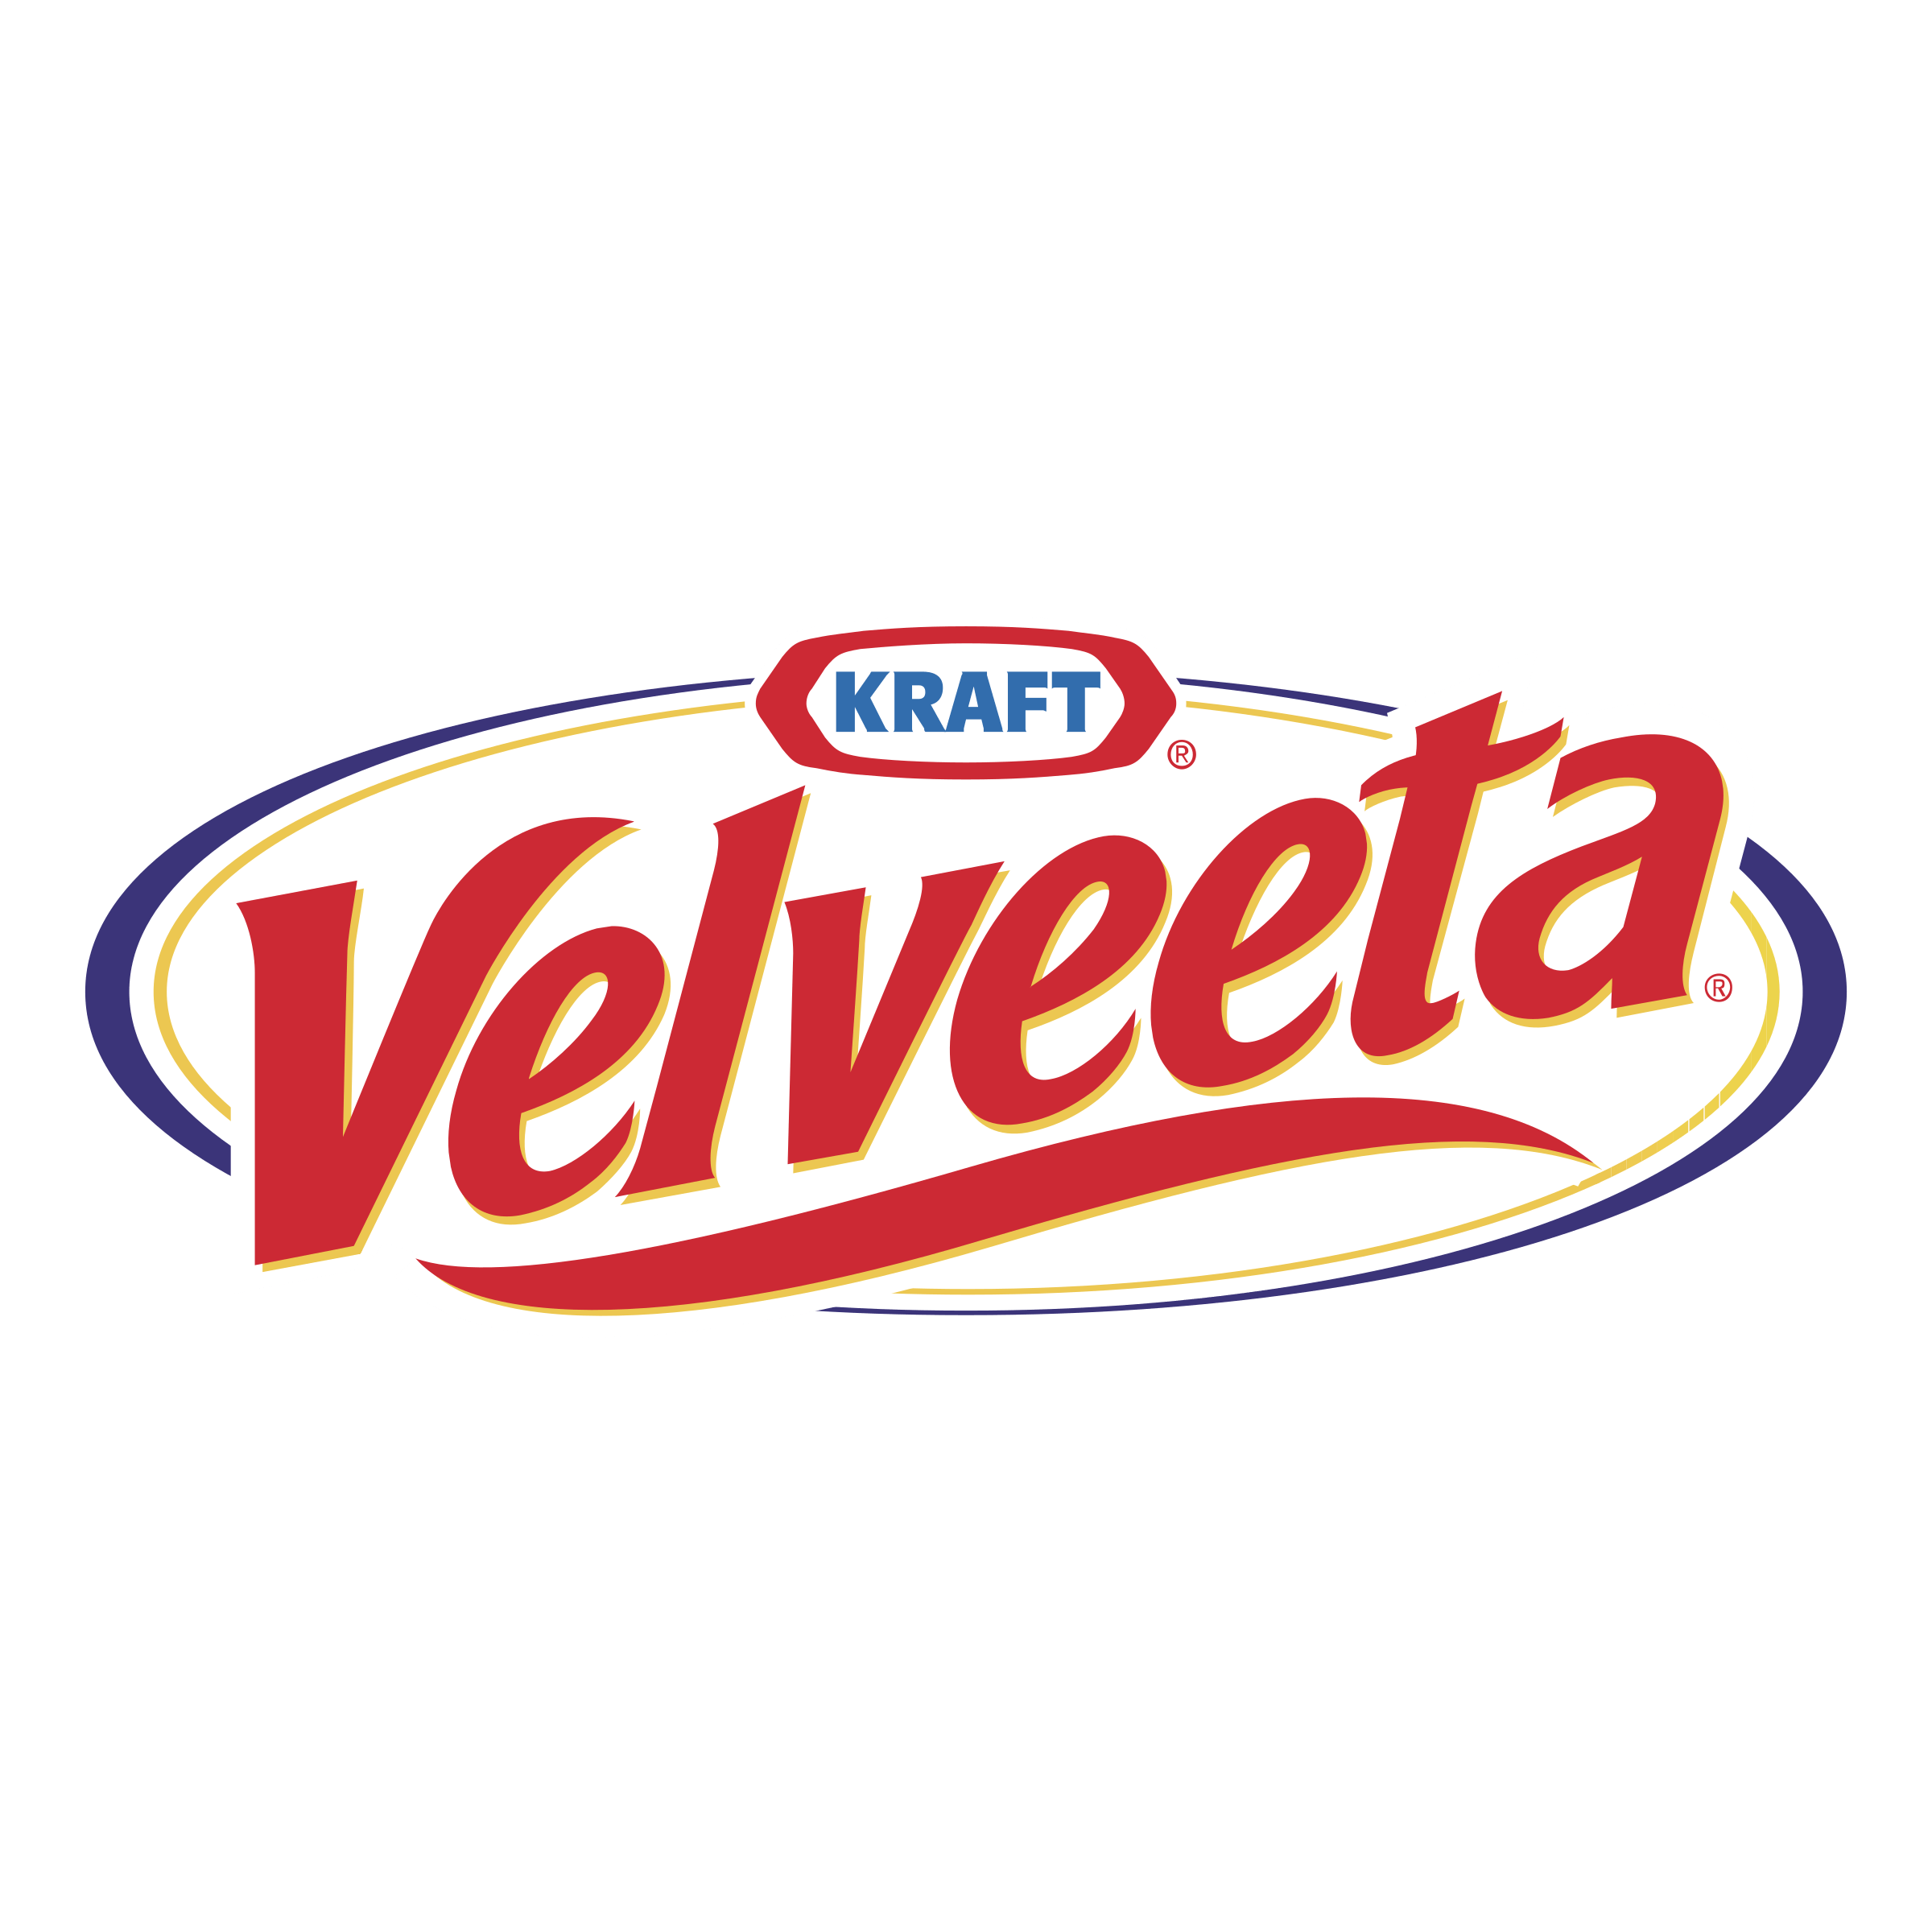 Velveeta Logo - Velveeta Logo PNG Transparent & SVG Vector - Freebie Supply